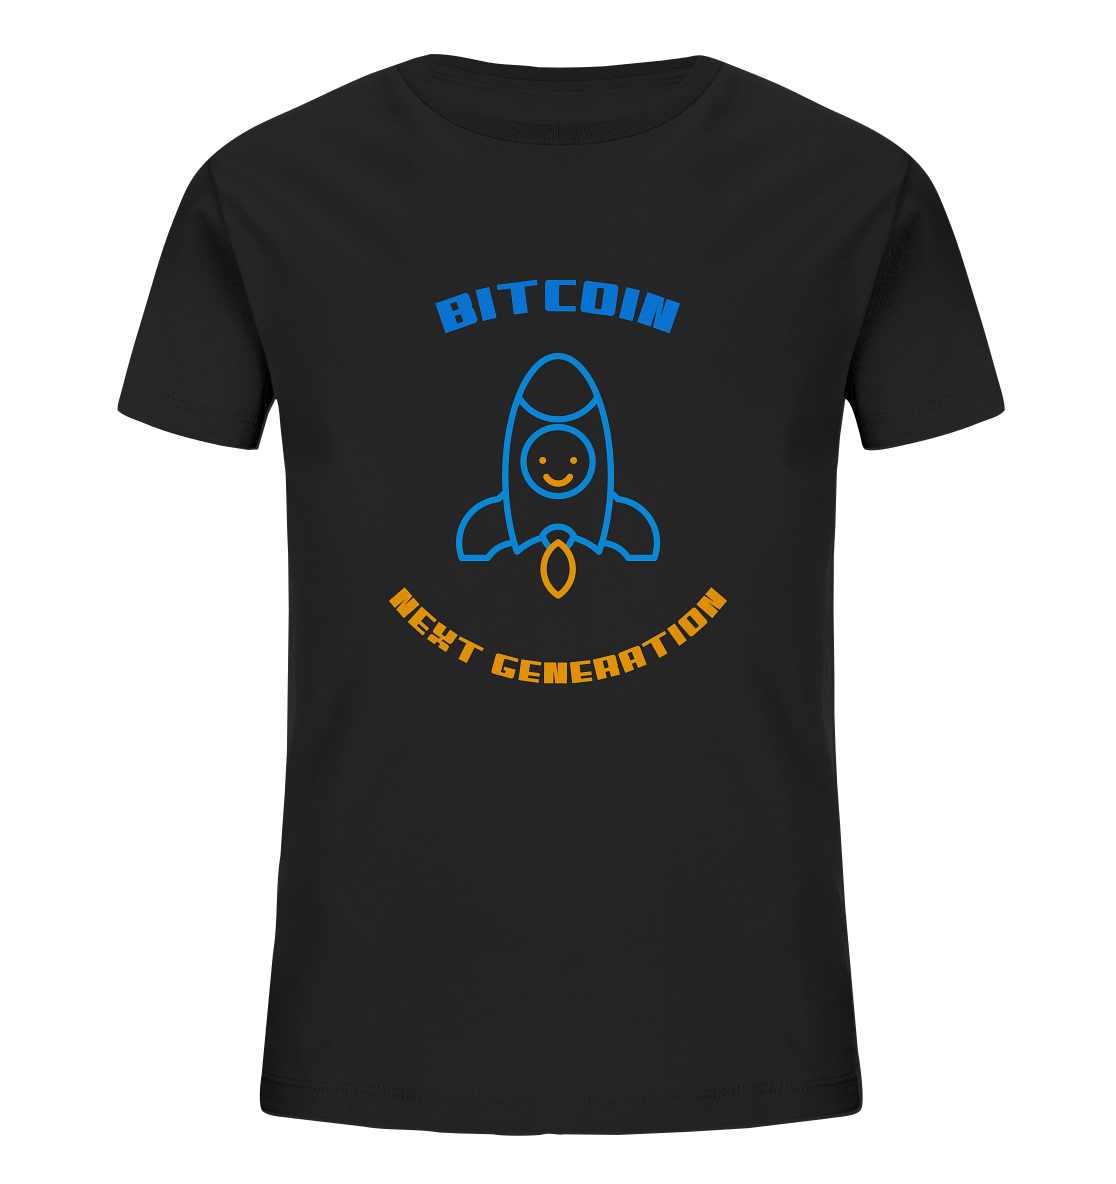 Bitcoin - Next Generation - Kids Organic Shirt